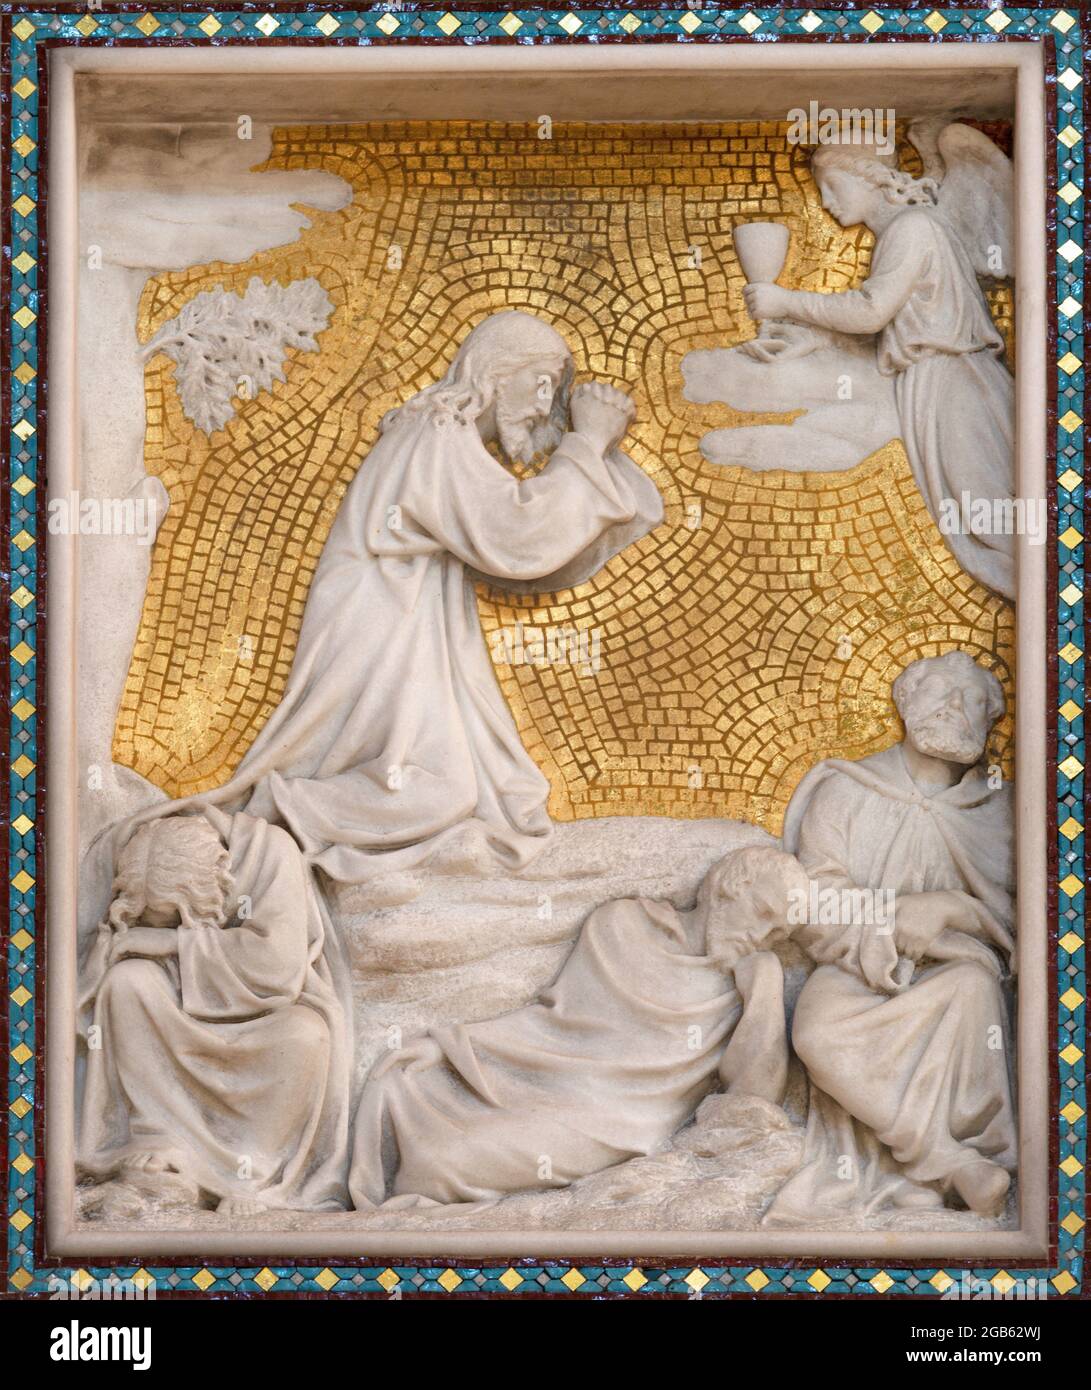 VIENNA, AUSTIRA - JUNI 24, 2021: The relief of Jesus prayer in the Gethsemane garden on the sidealtar of Votivkirche cathedral from 19. cent. Stock Photo